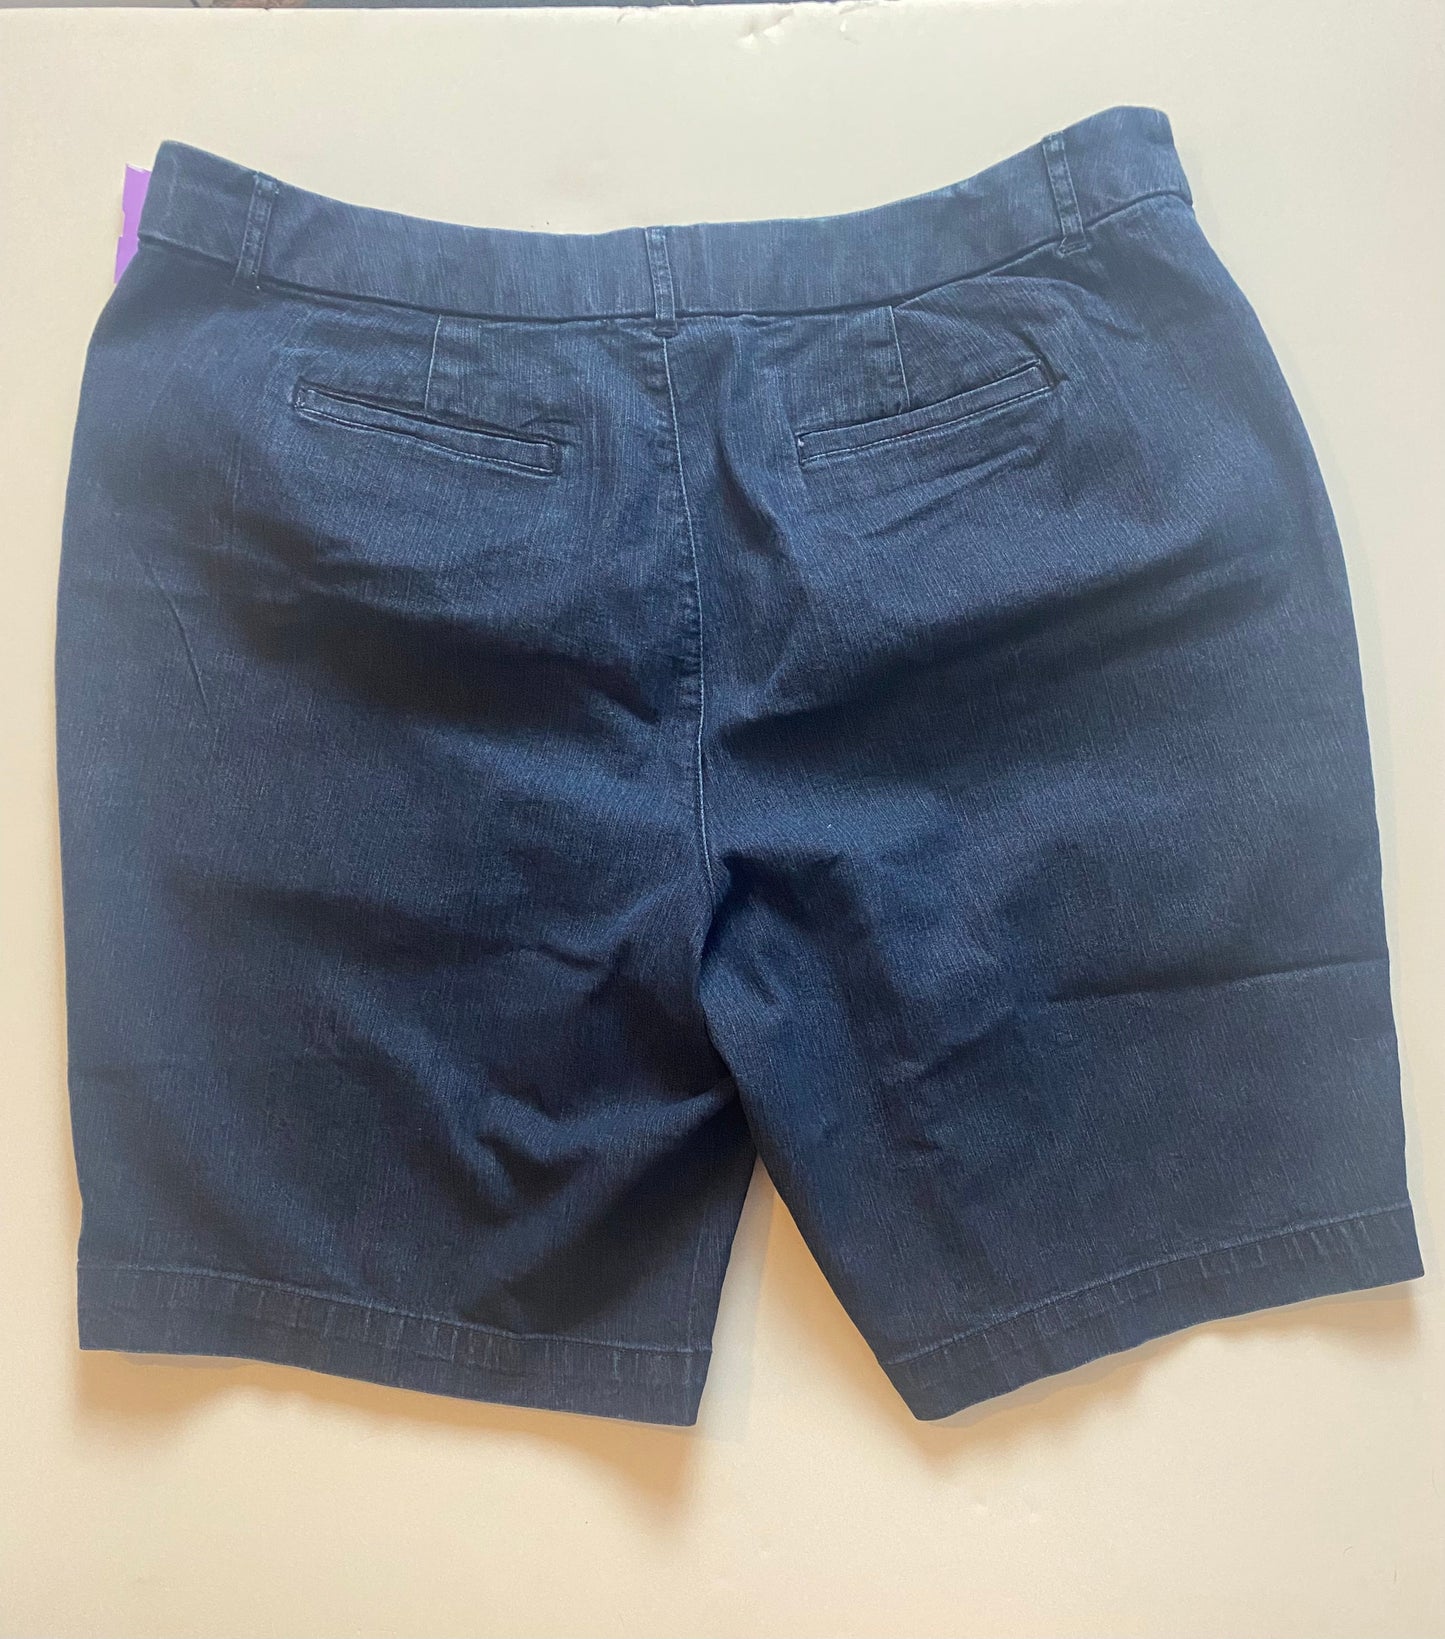 Shorts By St Johns Bay  Size: 20w